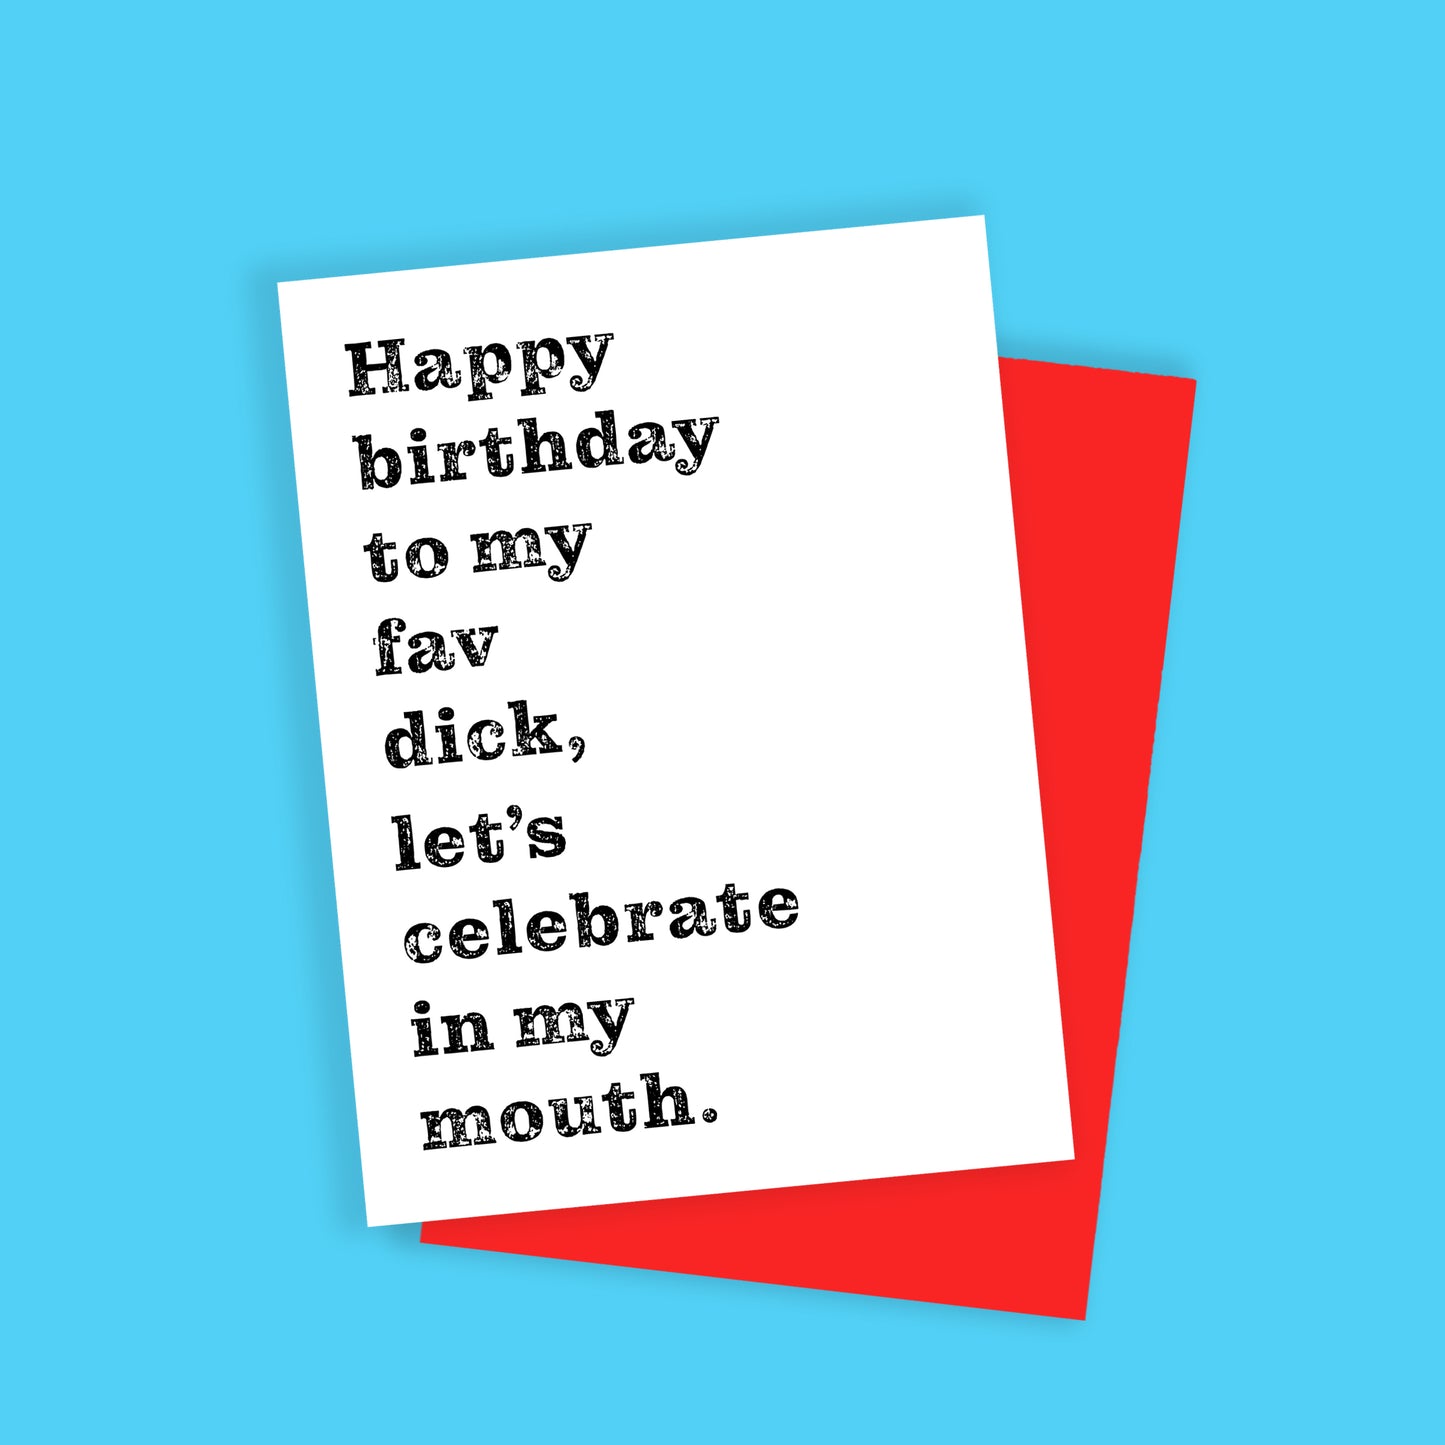 Happy birthday to my fav dick